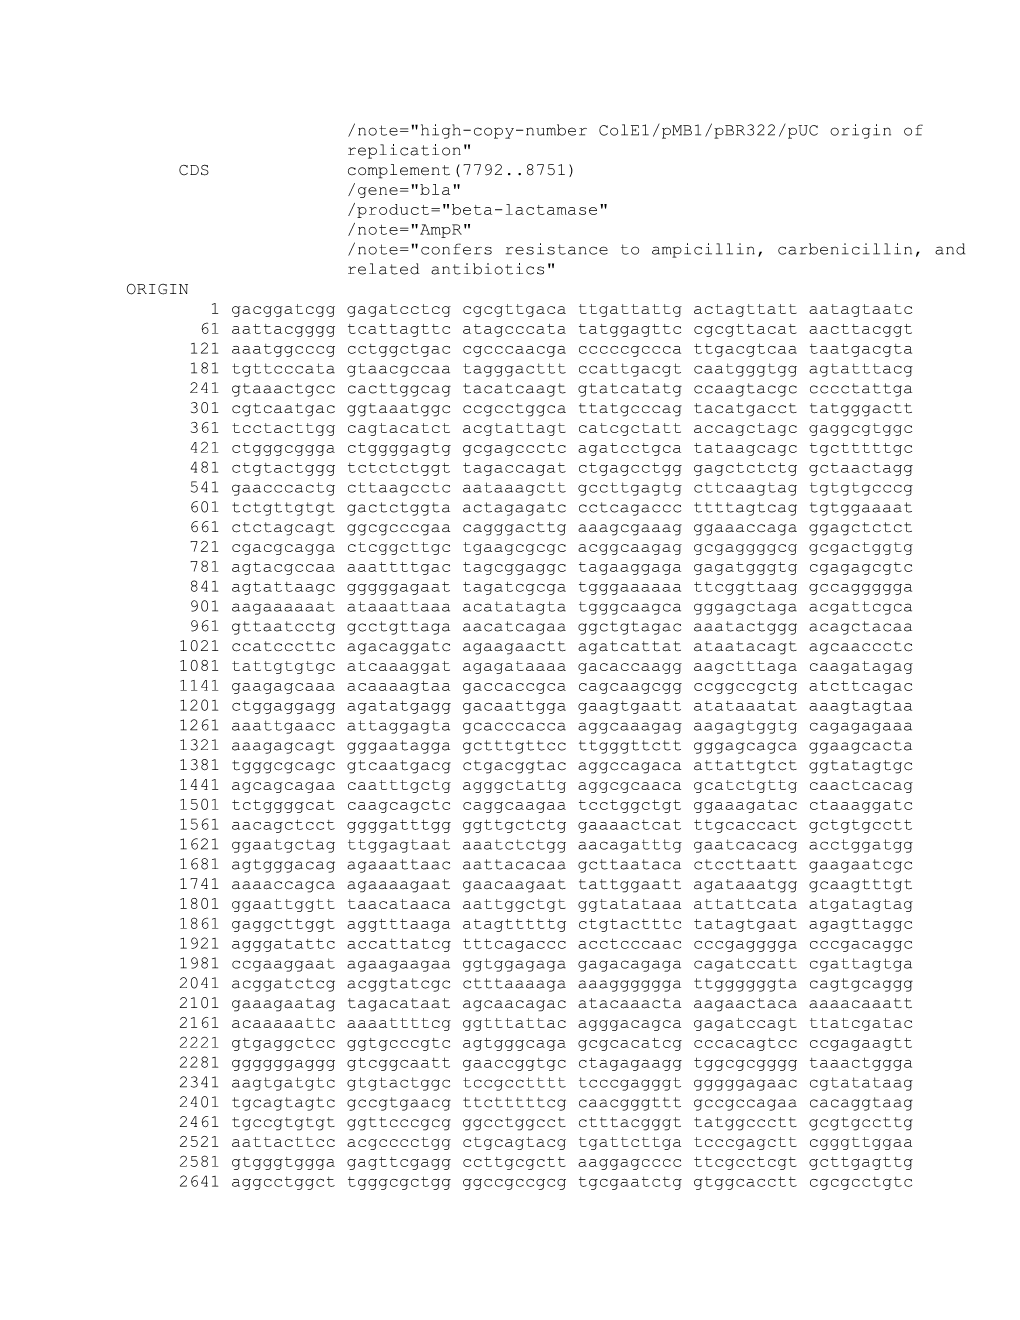 LOCUS Exported 8788 Bp Ds-DNA Circular SYN 02-JAN-2015